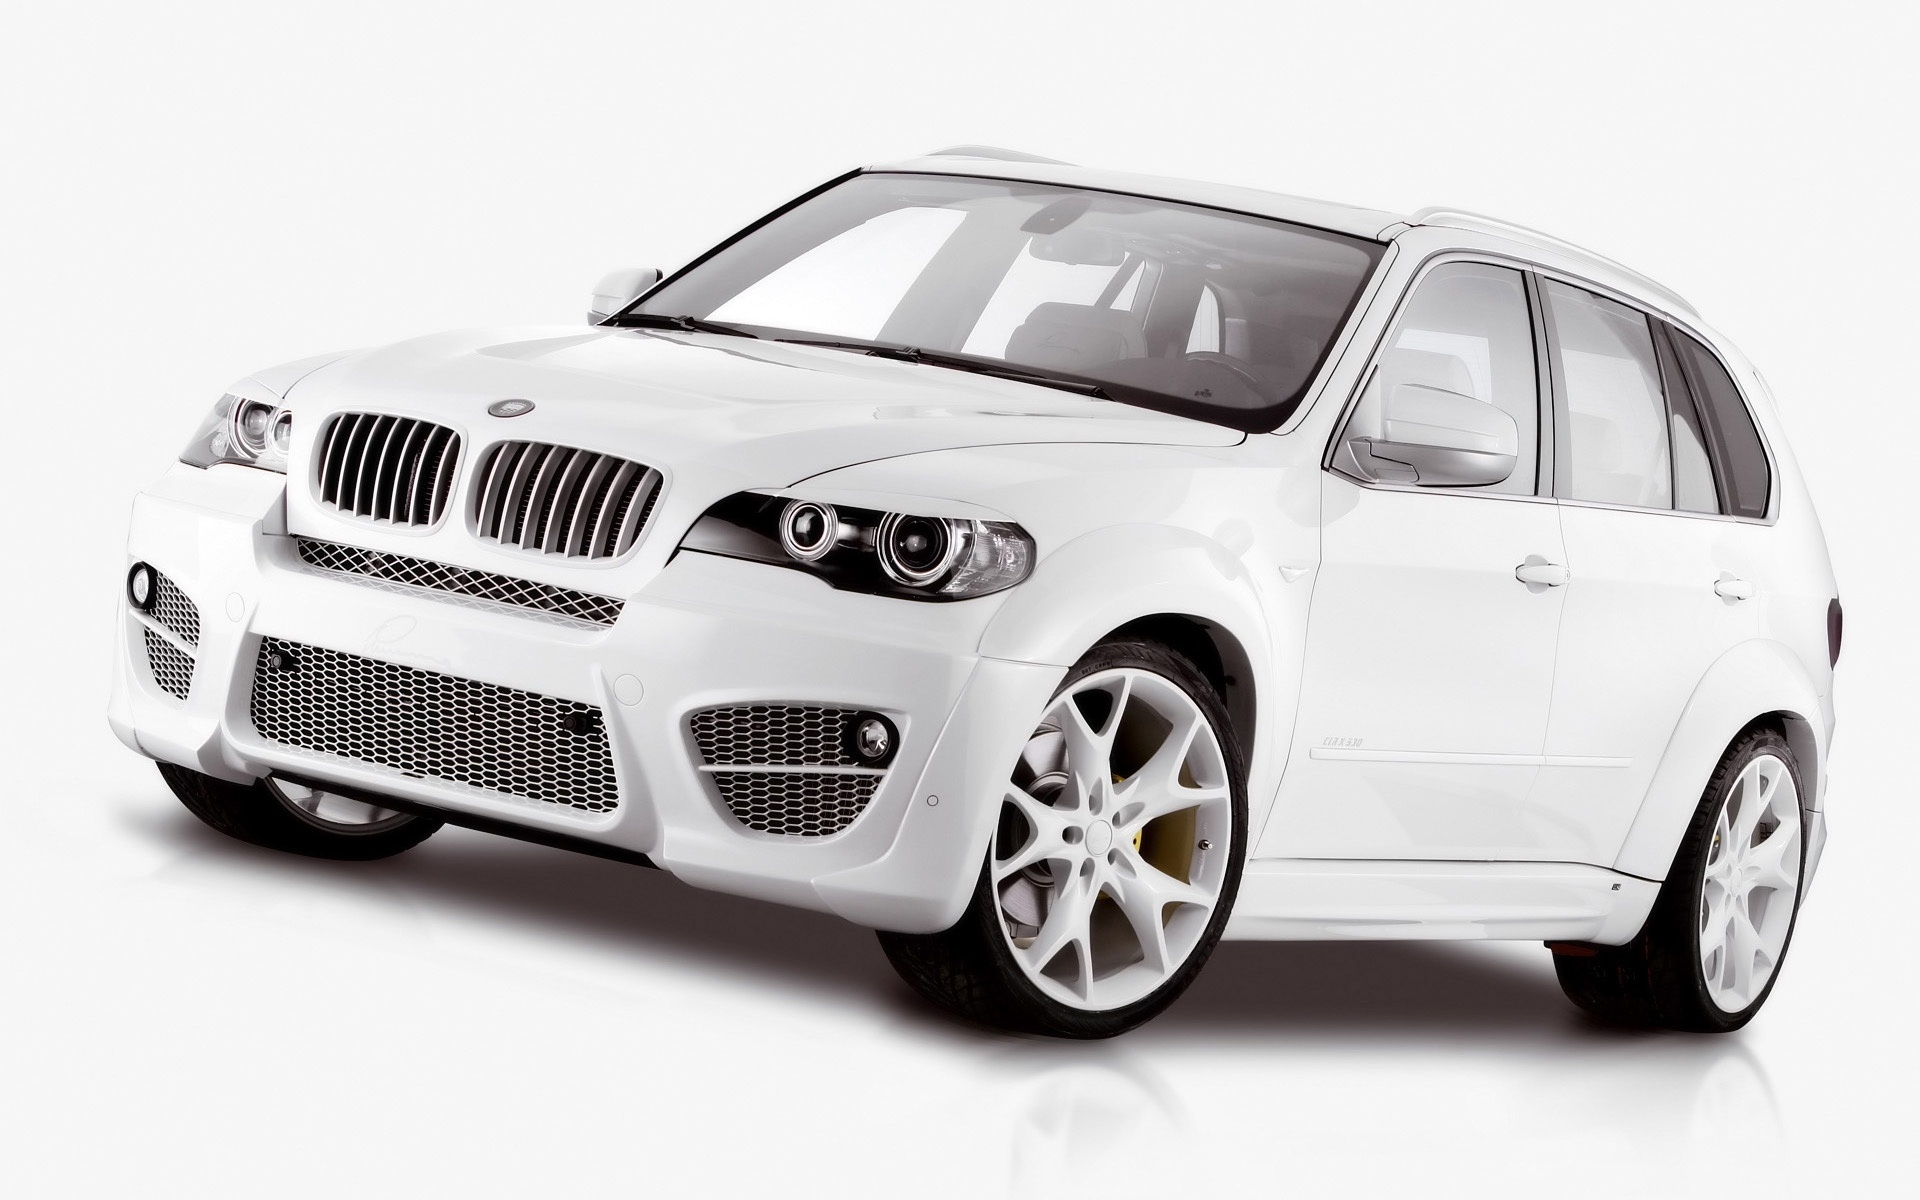 BMW CLR X530 Lumma Design 2008 for 1920 x 1200 widescreen resolution